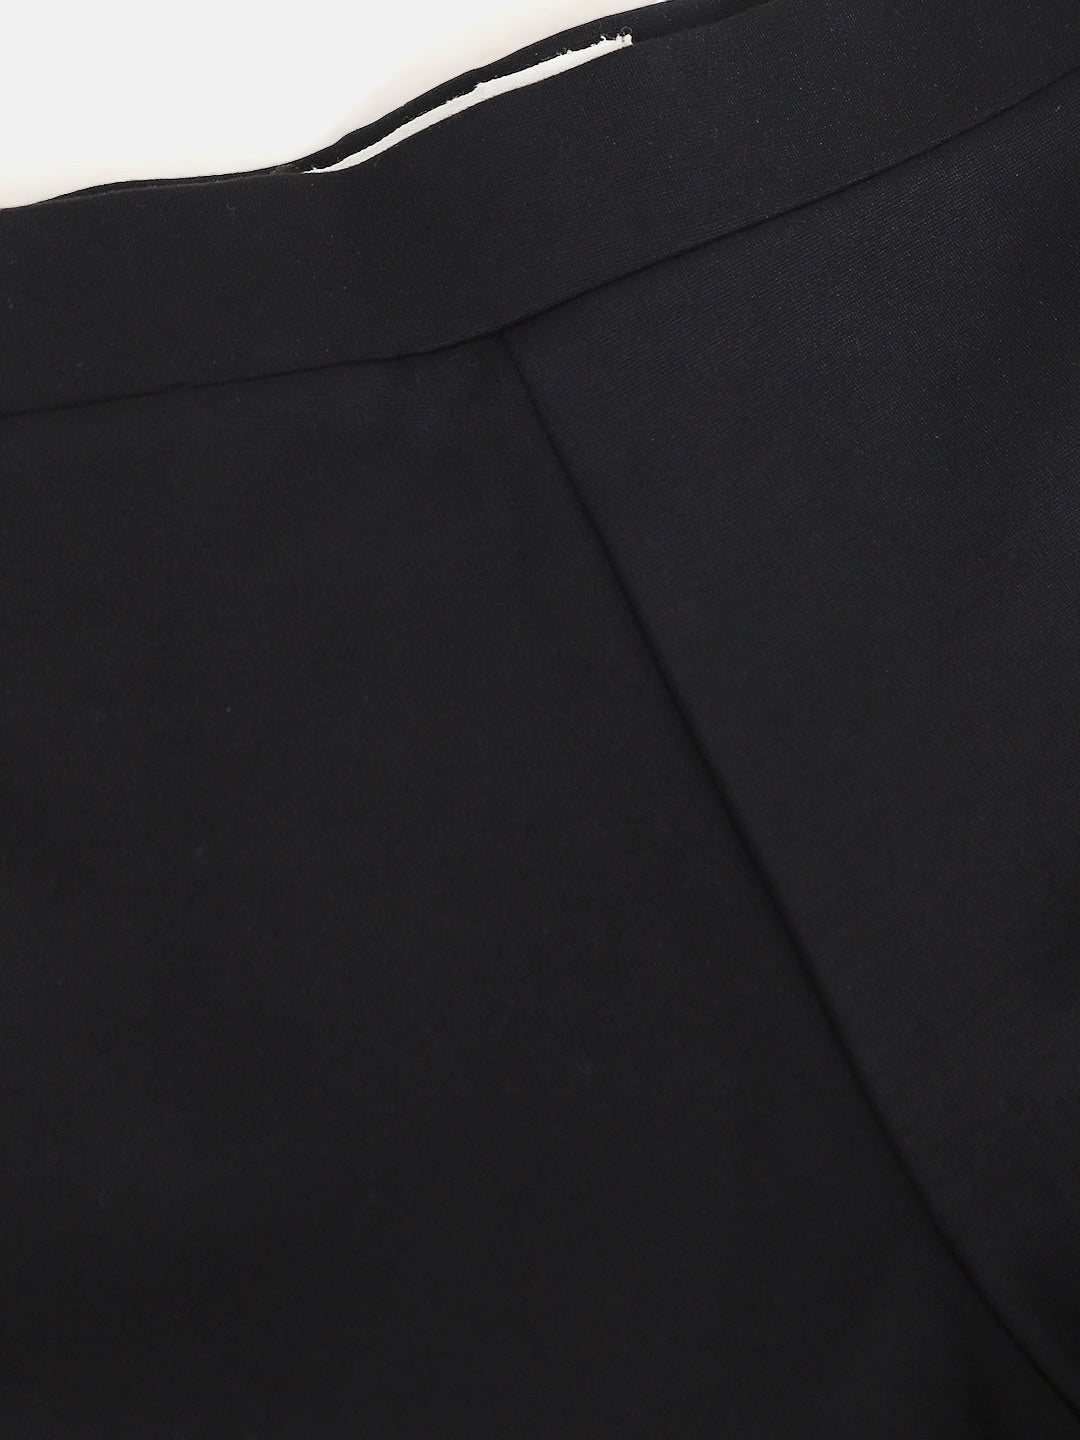 Primark Womens Black Trousers Size 8 L27 in – Preworn Ltd